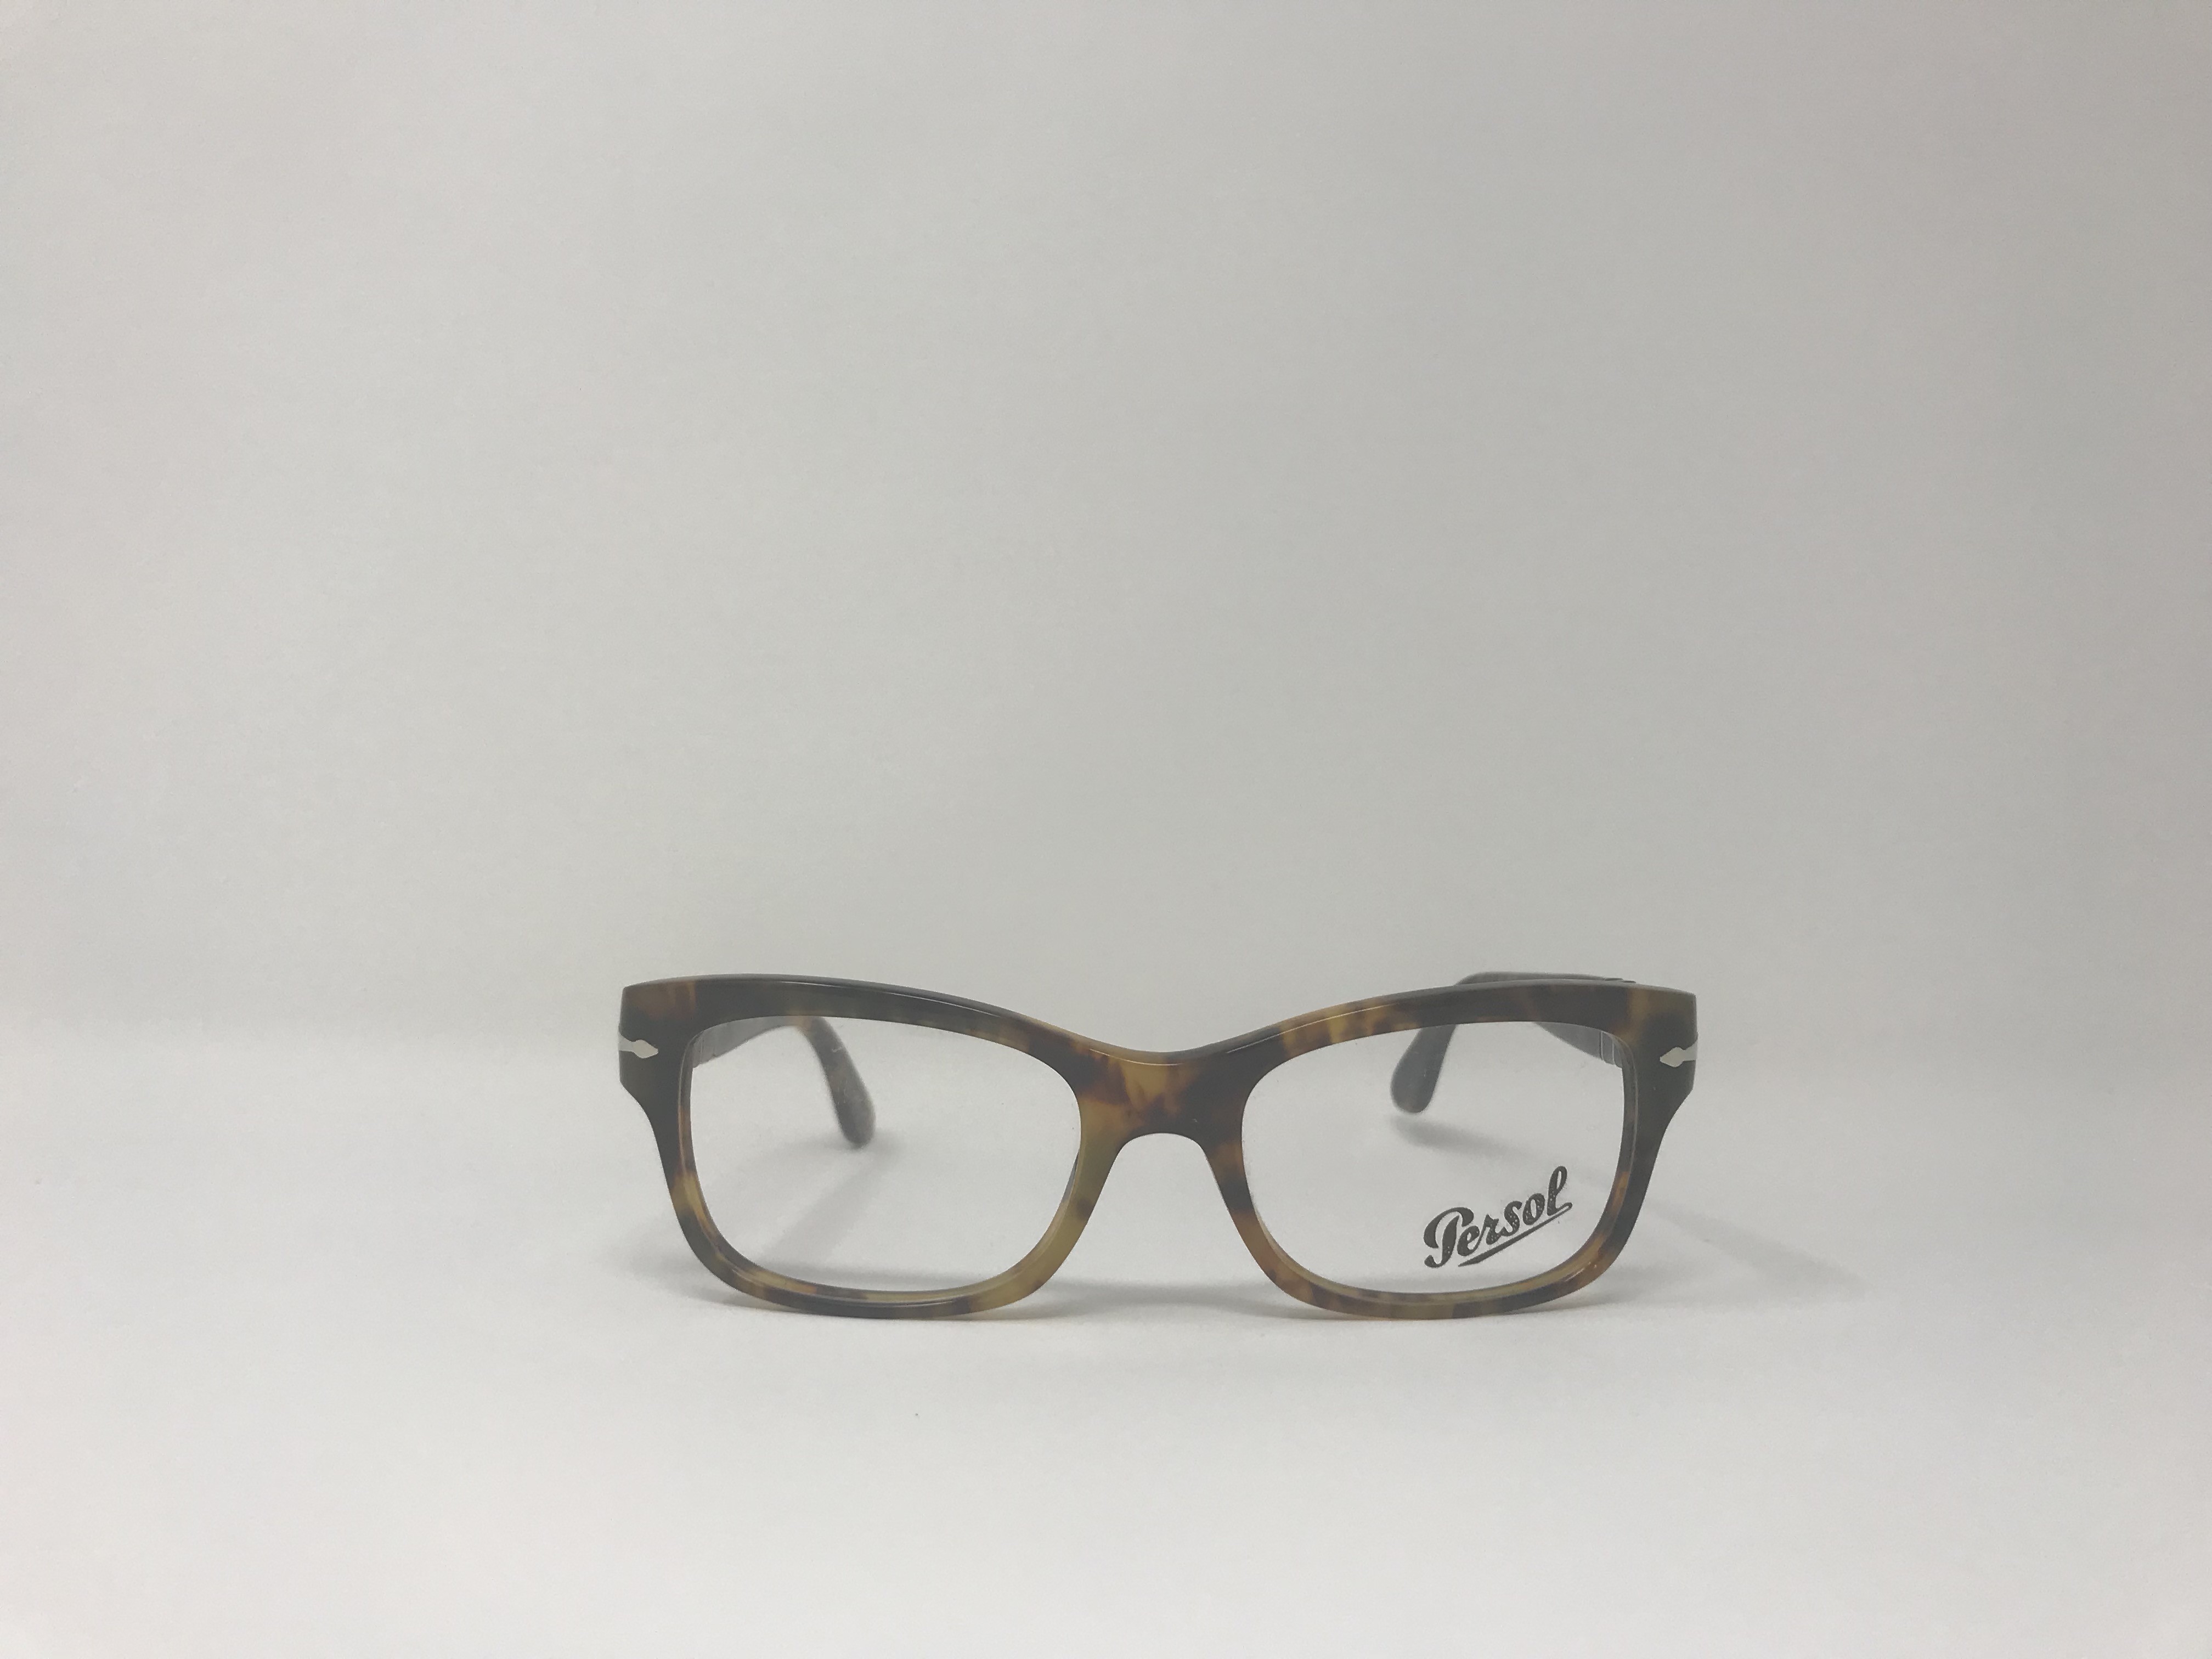 Persol 3054-V 108 Caffe unisex eyeglasses